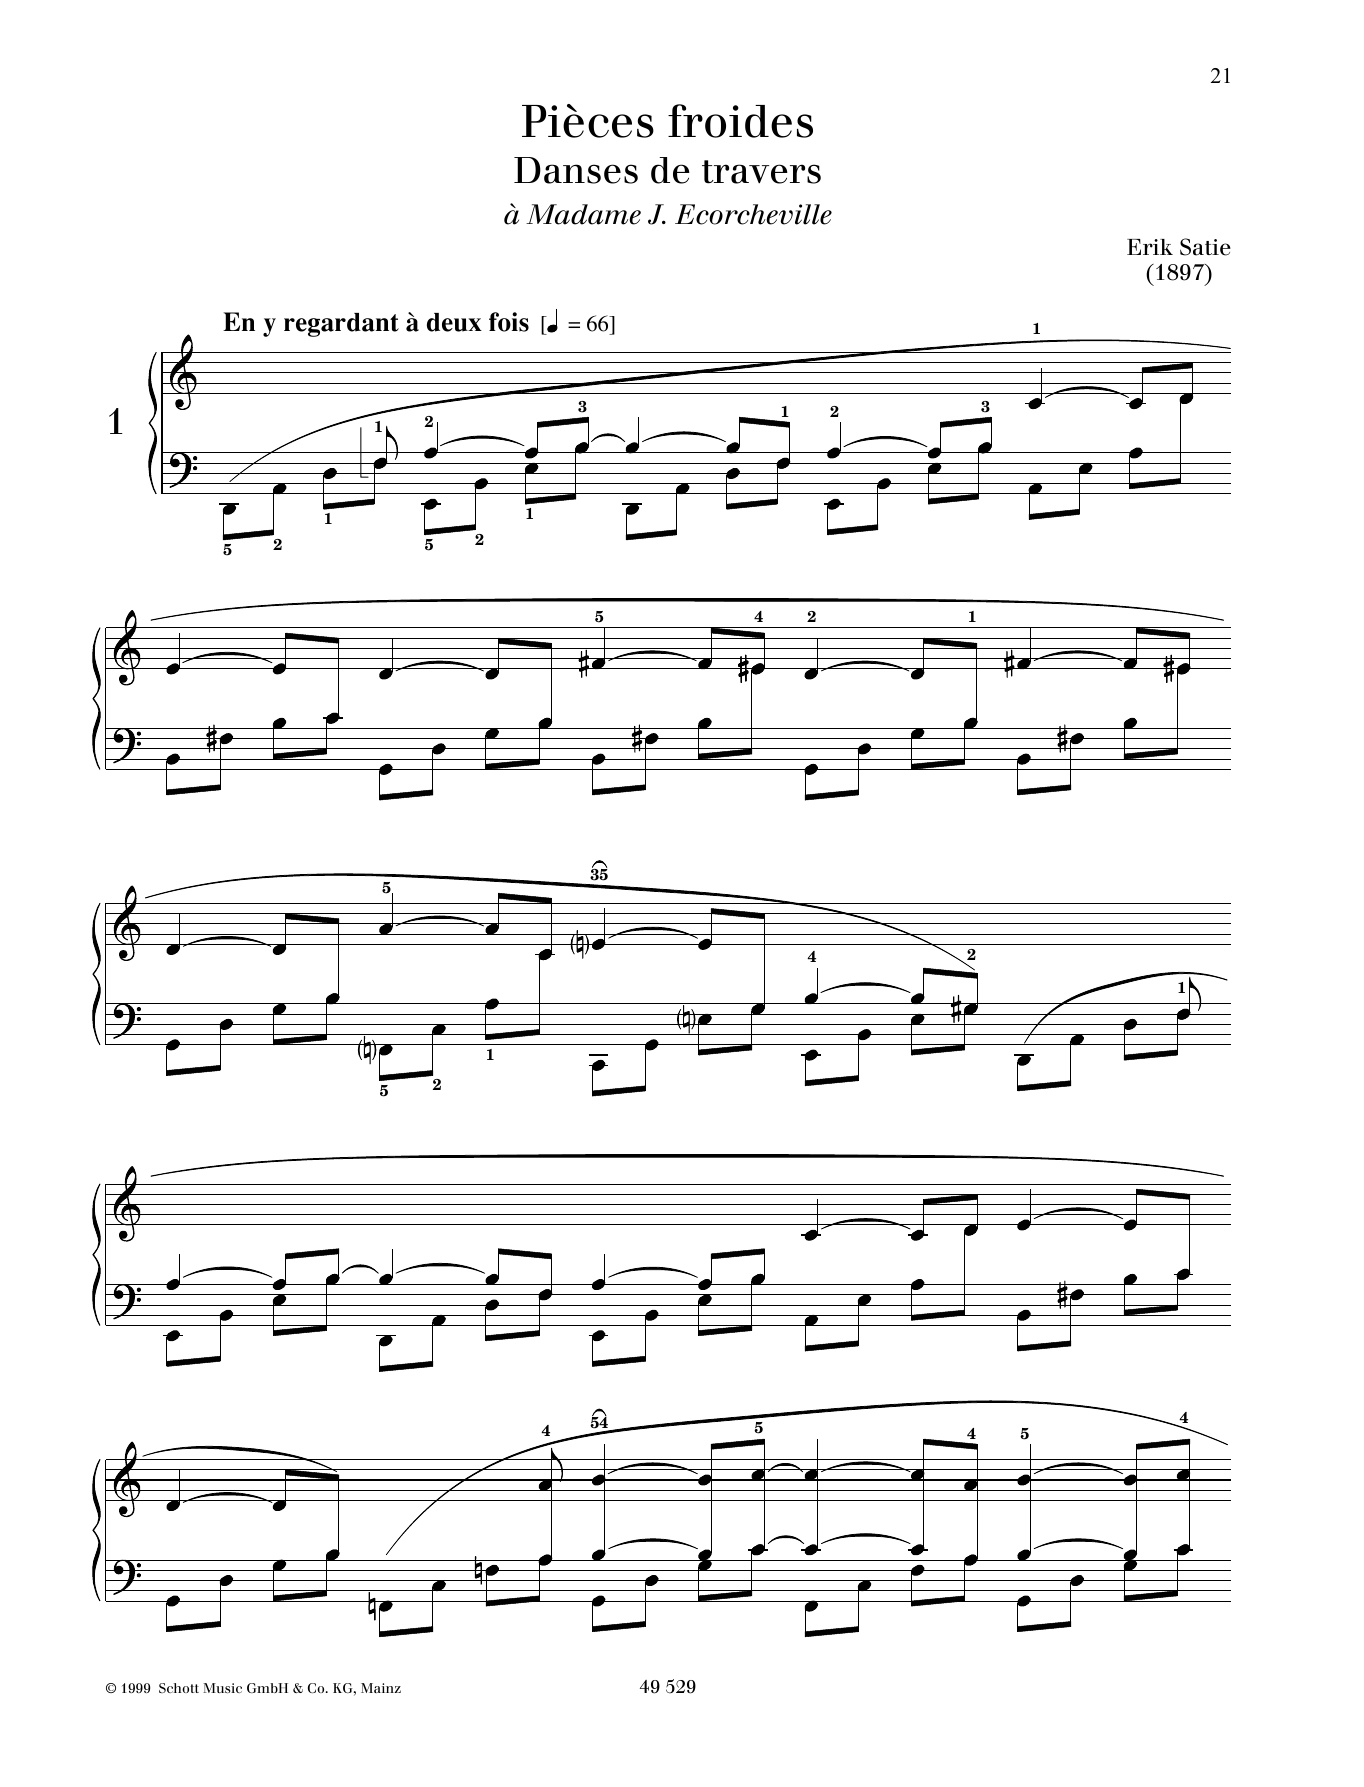 Erik Satie Danse de travers No. 1 Sheet Music Notes & Chords for Piano Solo - Download or Print PDF